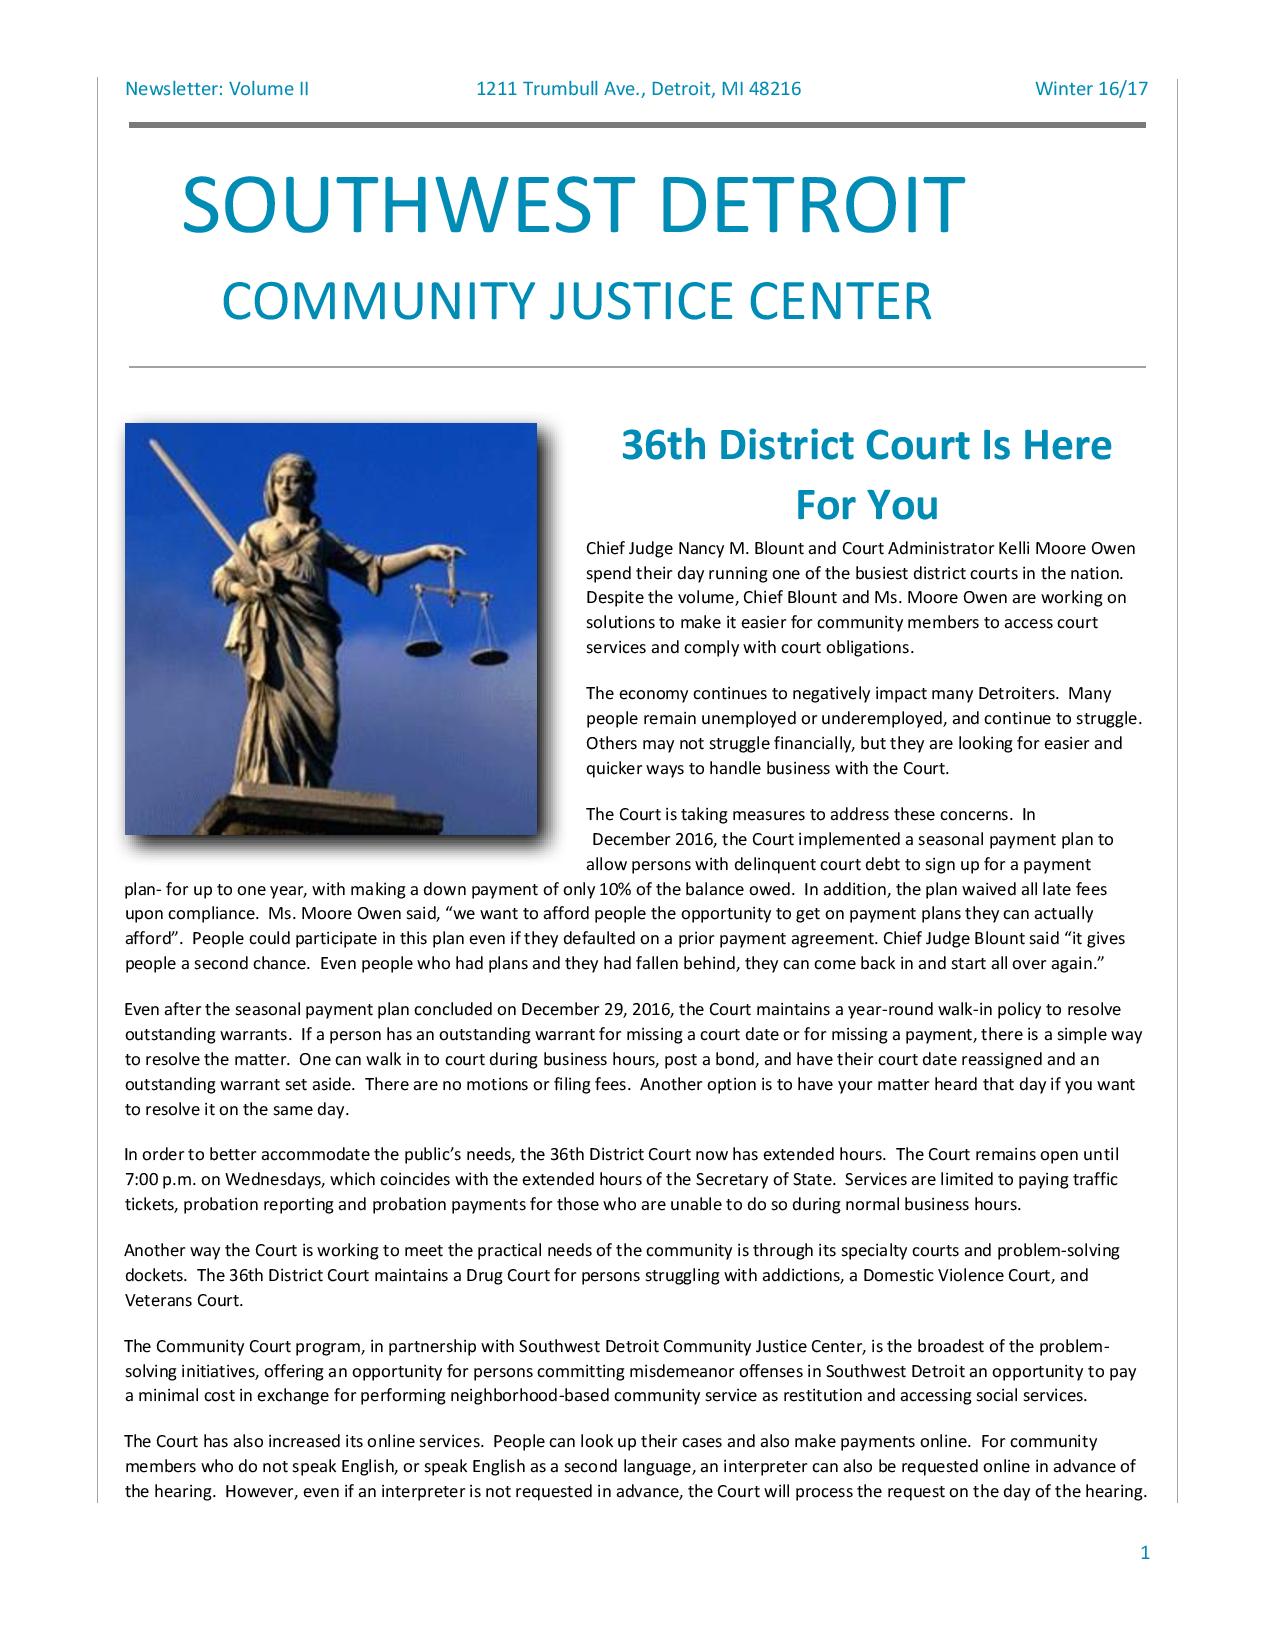 Southwest Detroit Community Justice Center Winter-Newsletter17-page-001